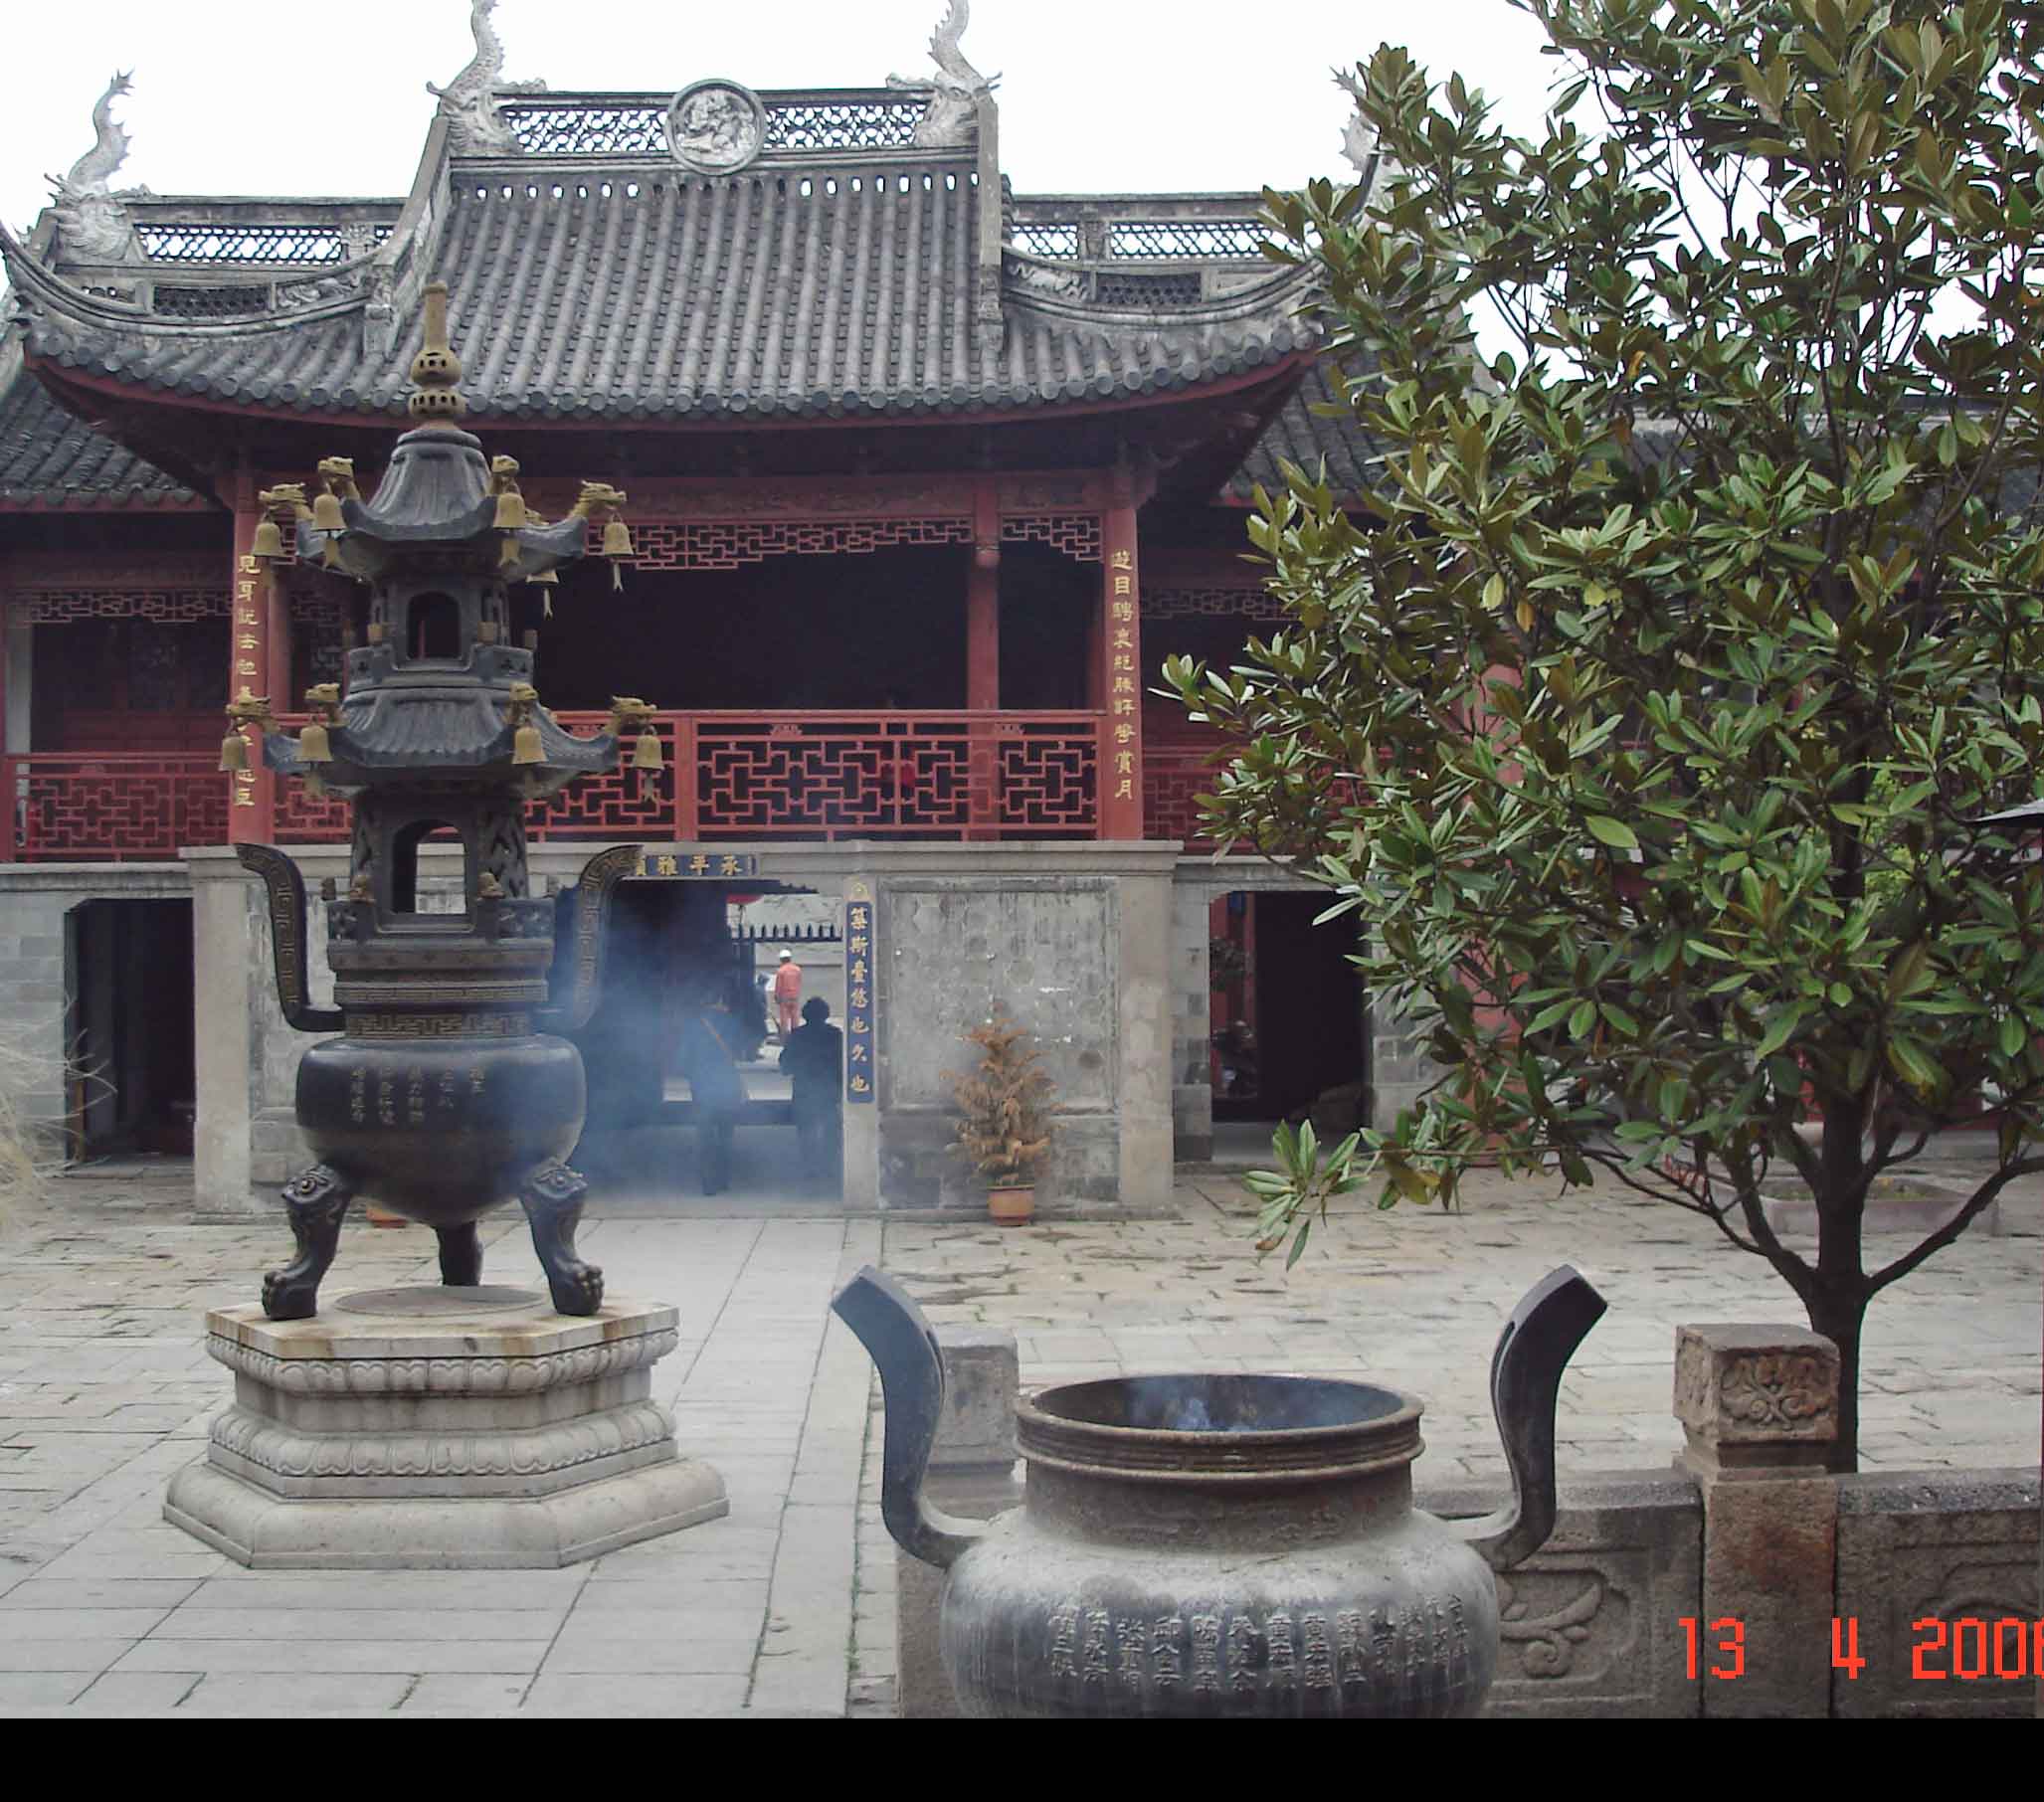 City God temple - dramatic looking incense burner-Zhujiajiao